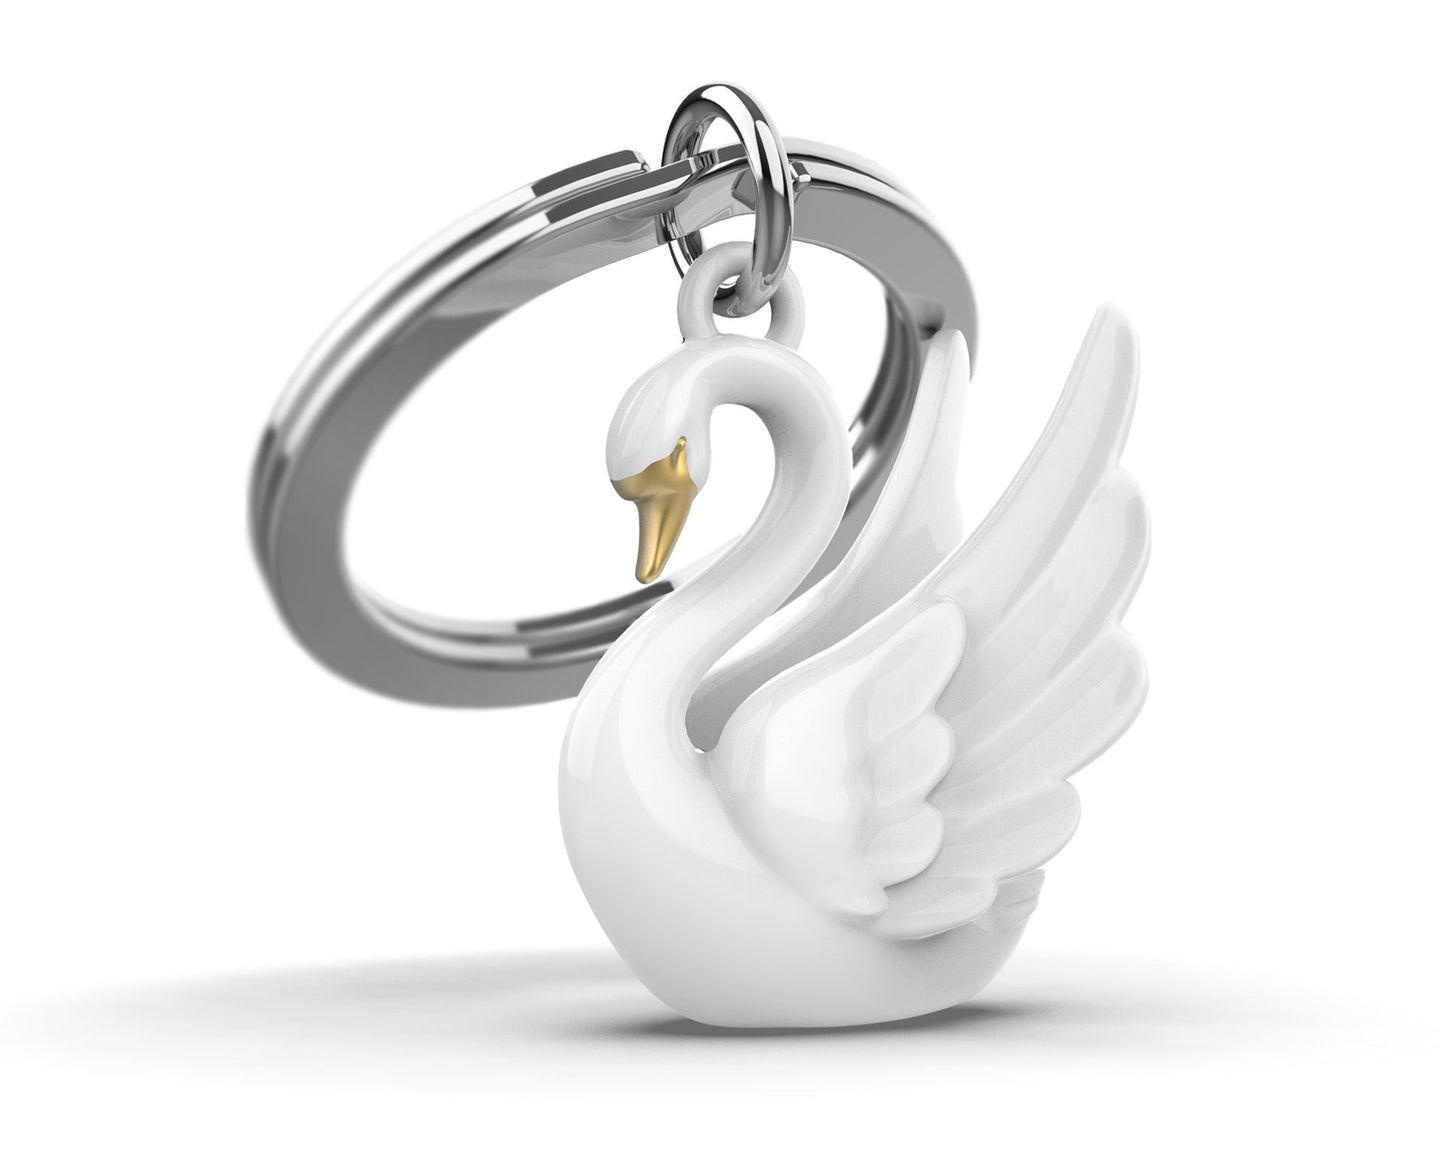 Swan key ring